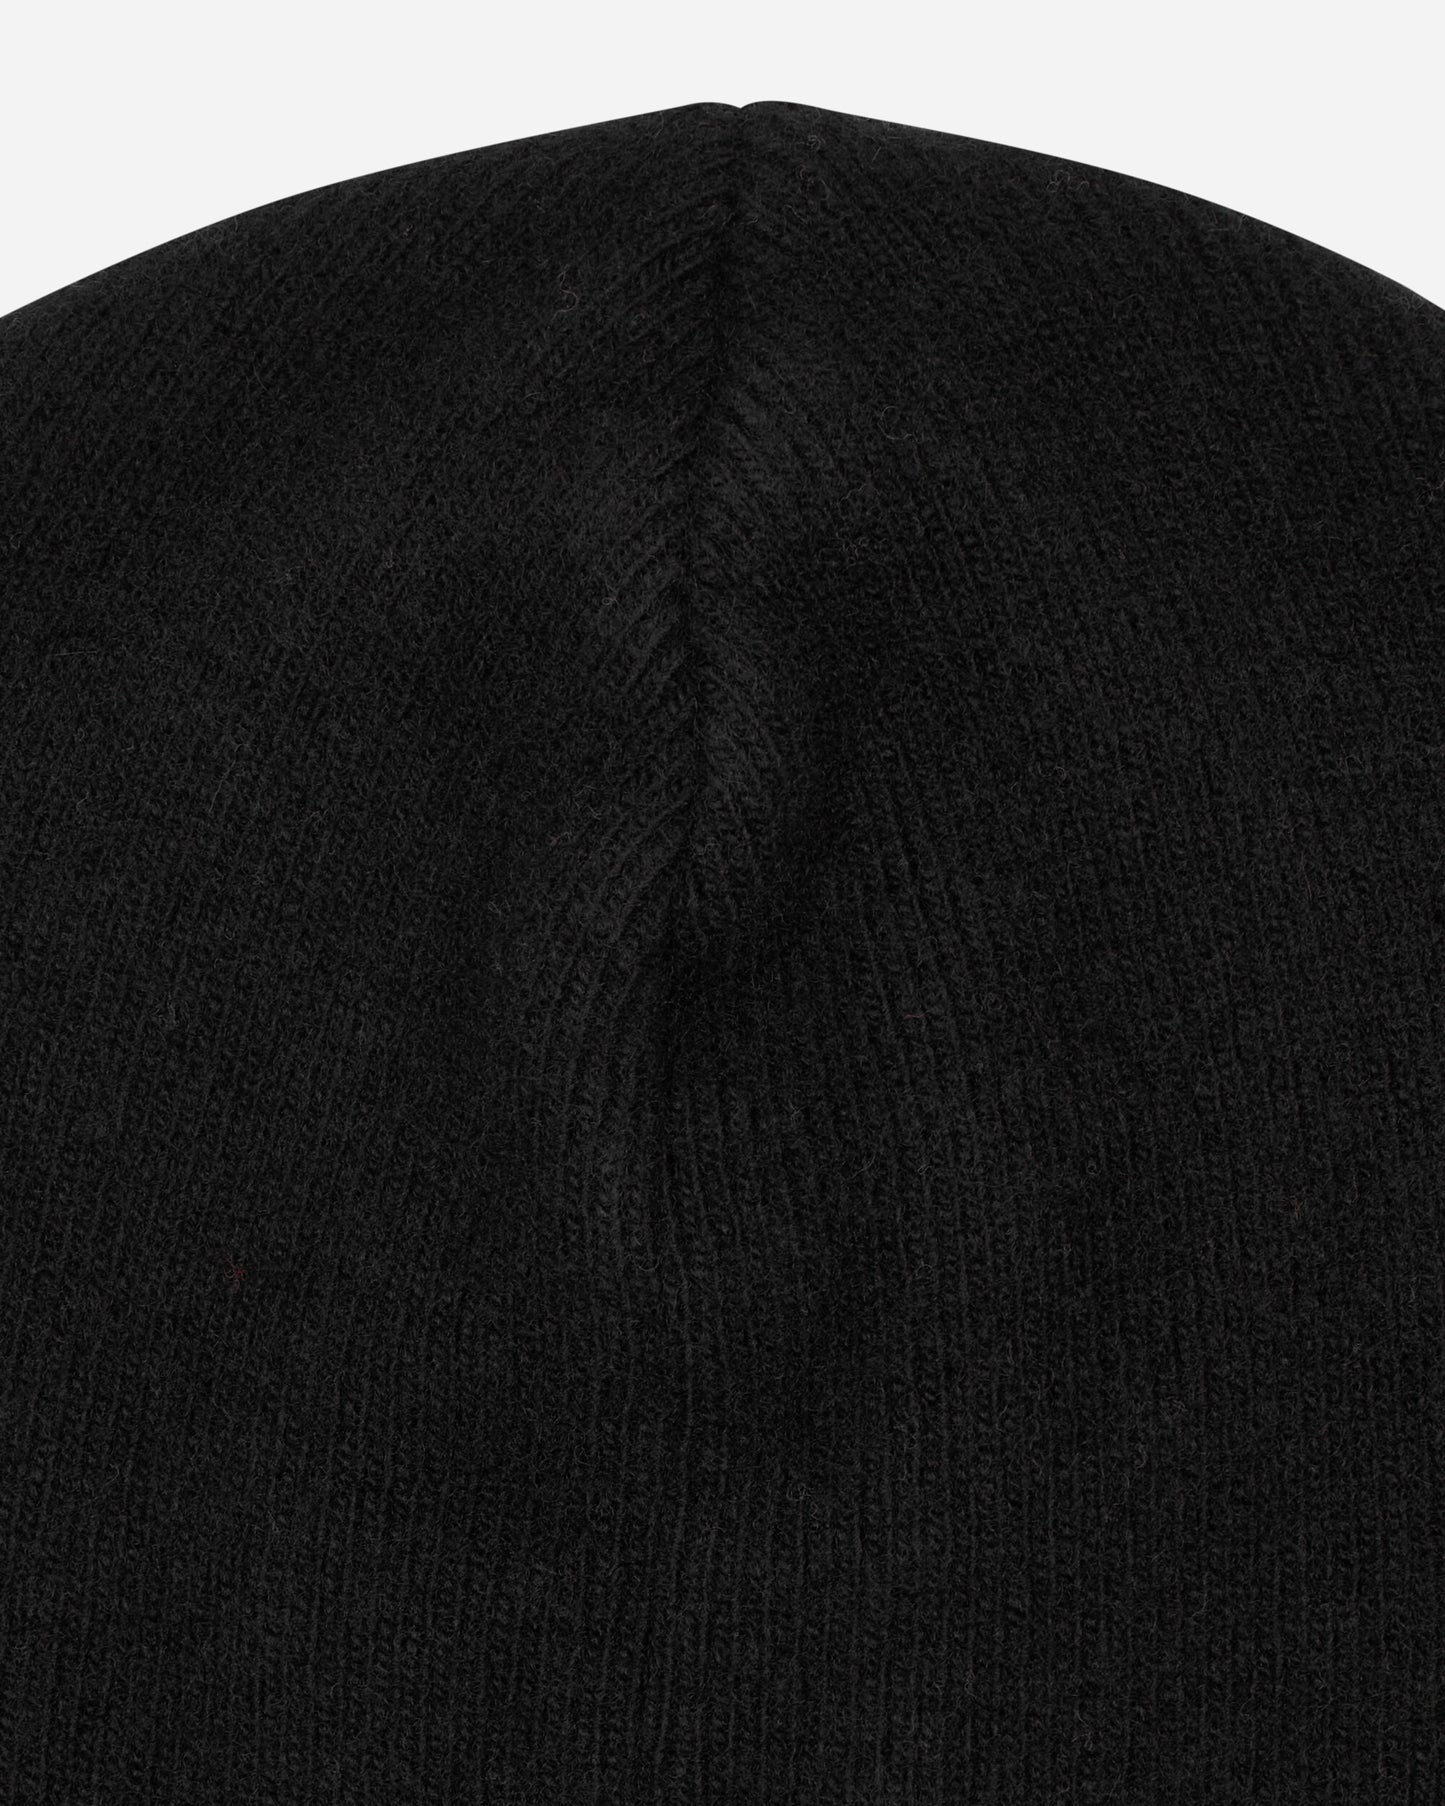 OAMC Whistler Beanie Black Hats Beanies 23A28OAK13B 001